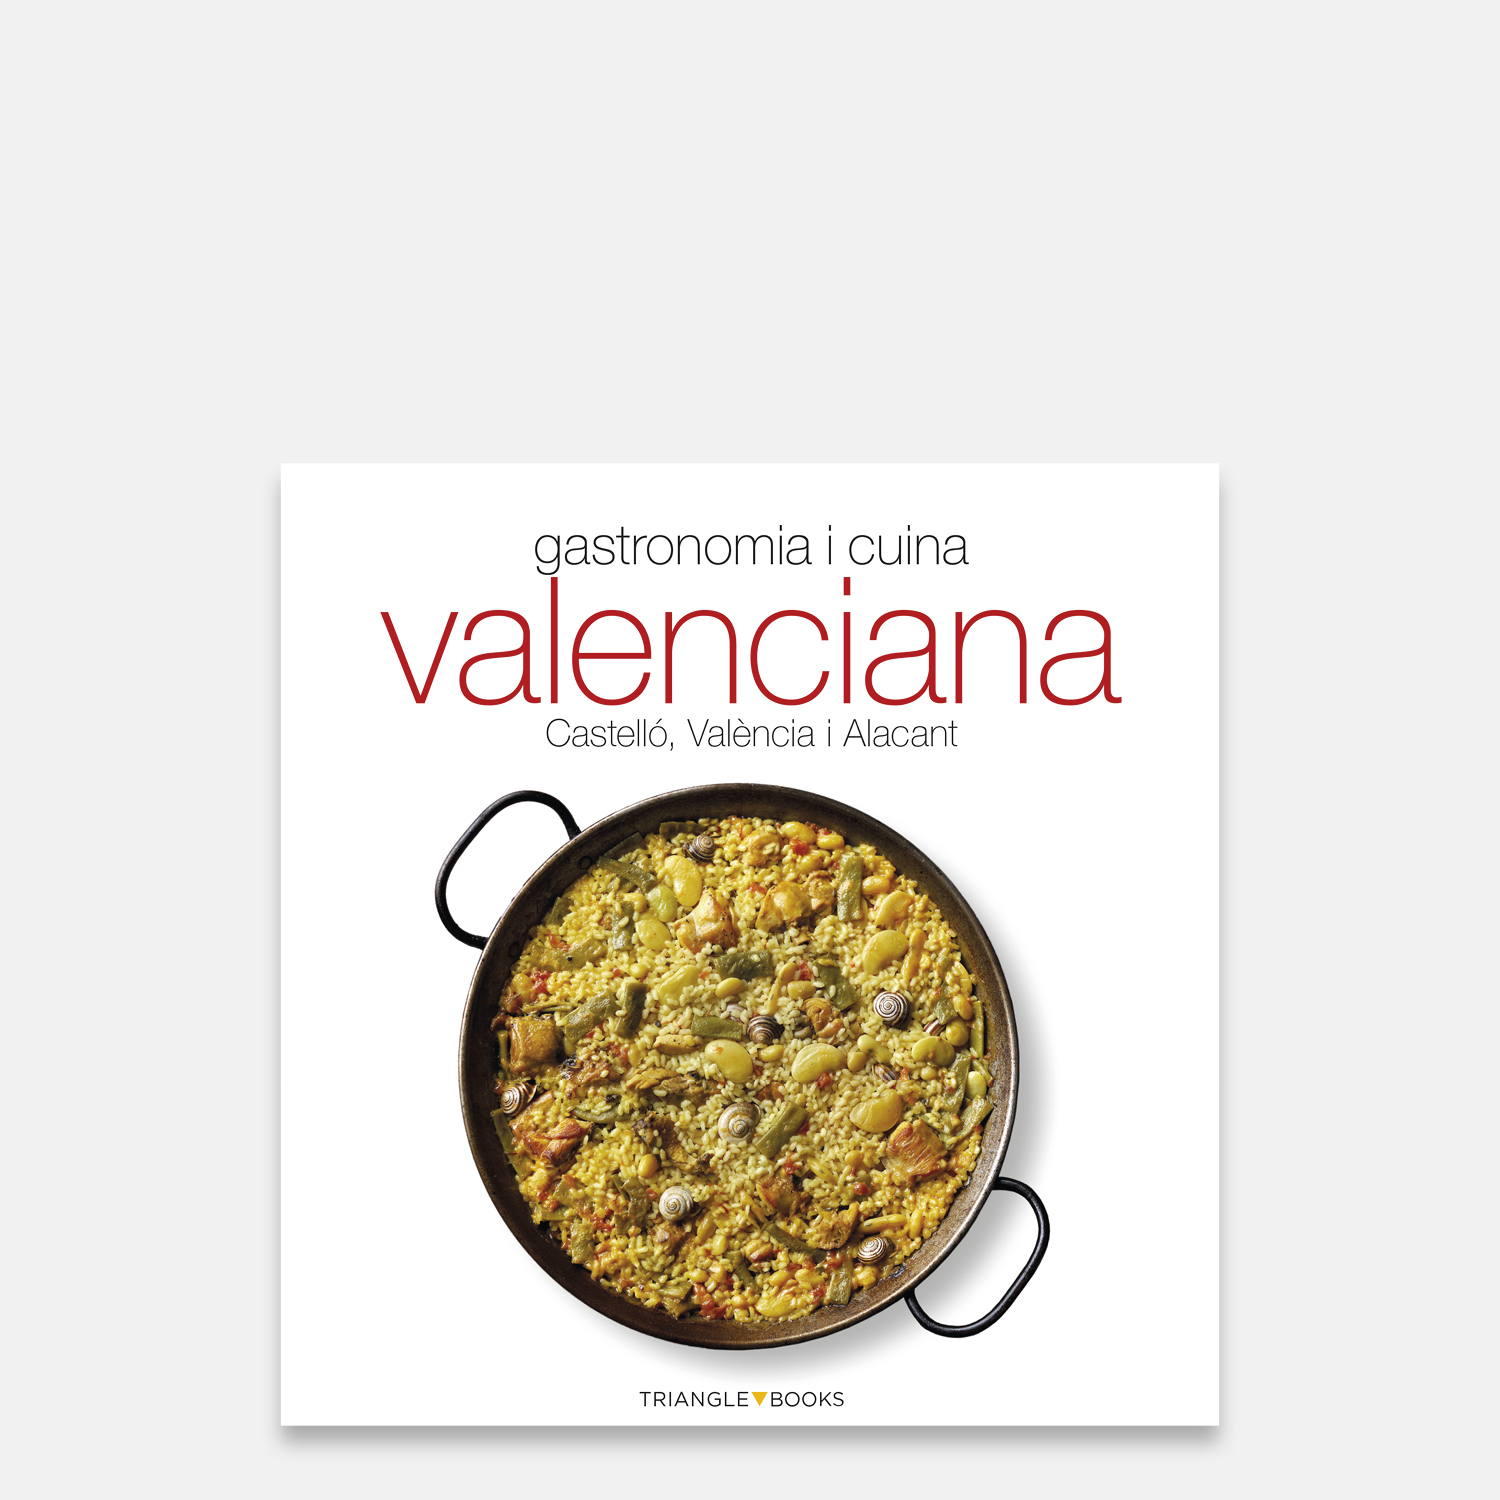 Gastronomia i cuina valenciana Cob CUV C Valencia cuina